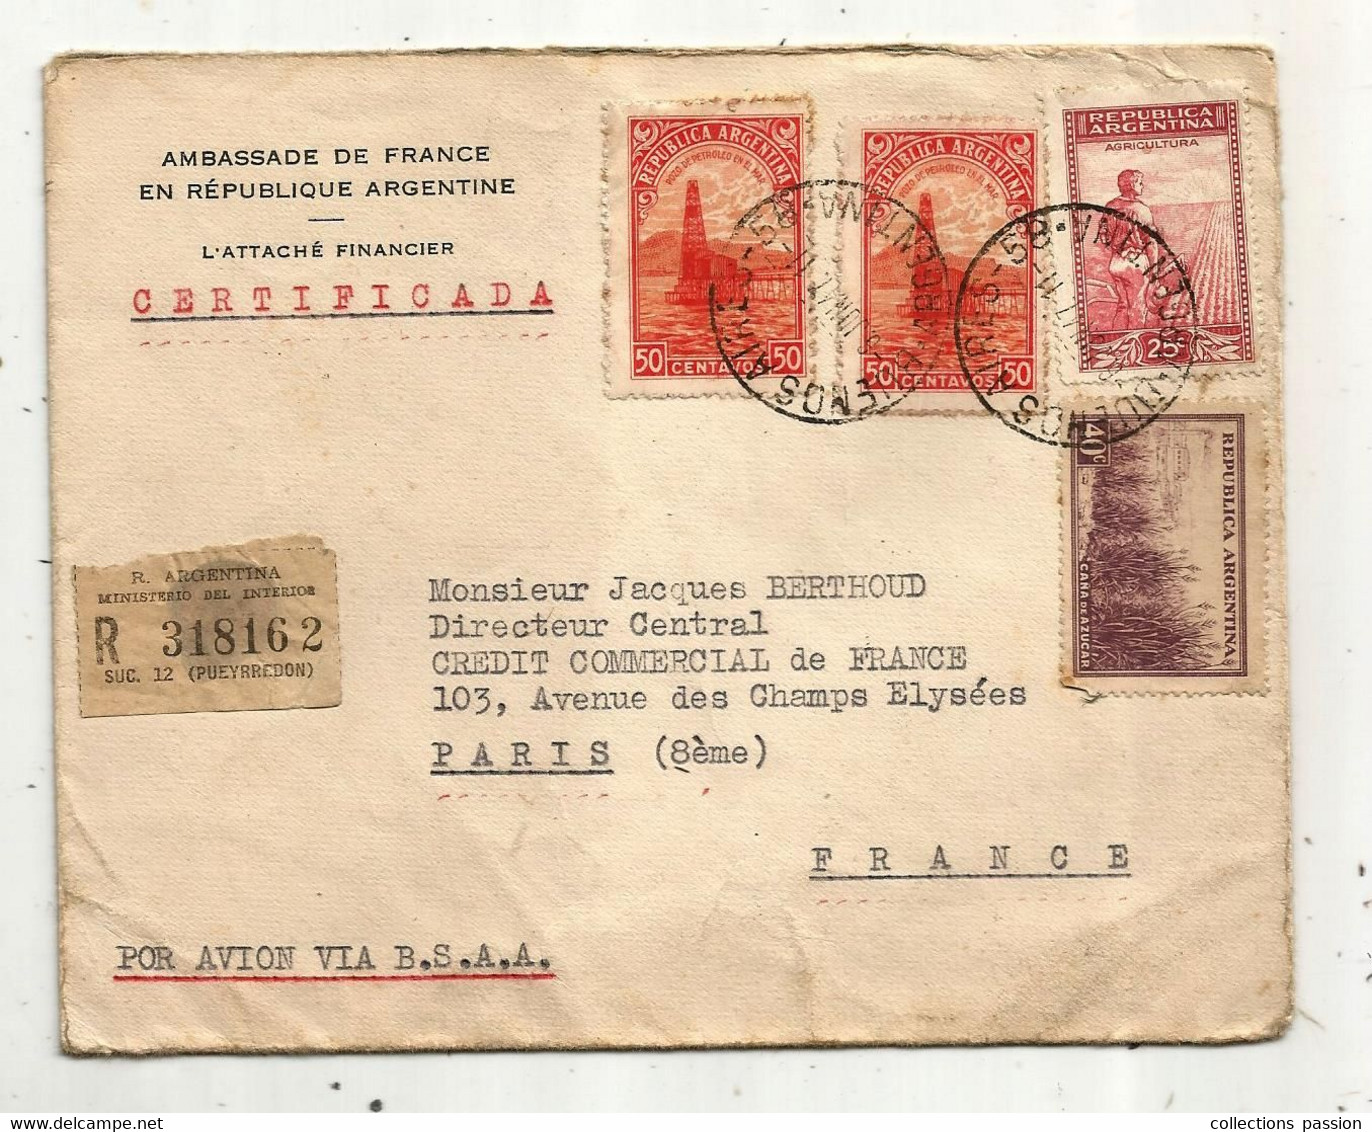 Lettre , Republica Argentina , BUENOS AIRES 58 ,1947, Ambassade De France ,CERTIFICADA ,R Suc. 12 (PUEYRREDON) - Cartas & Documentos